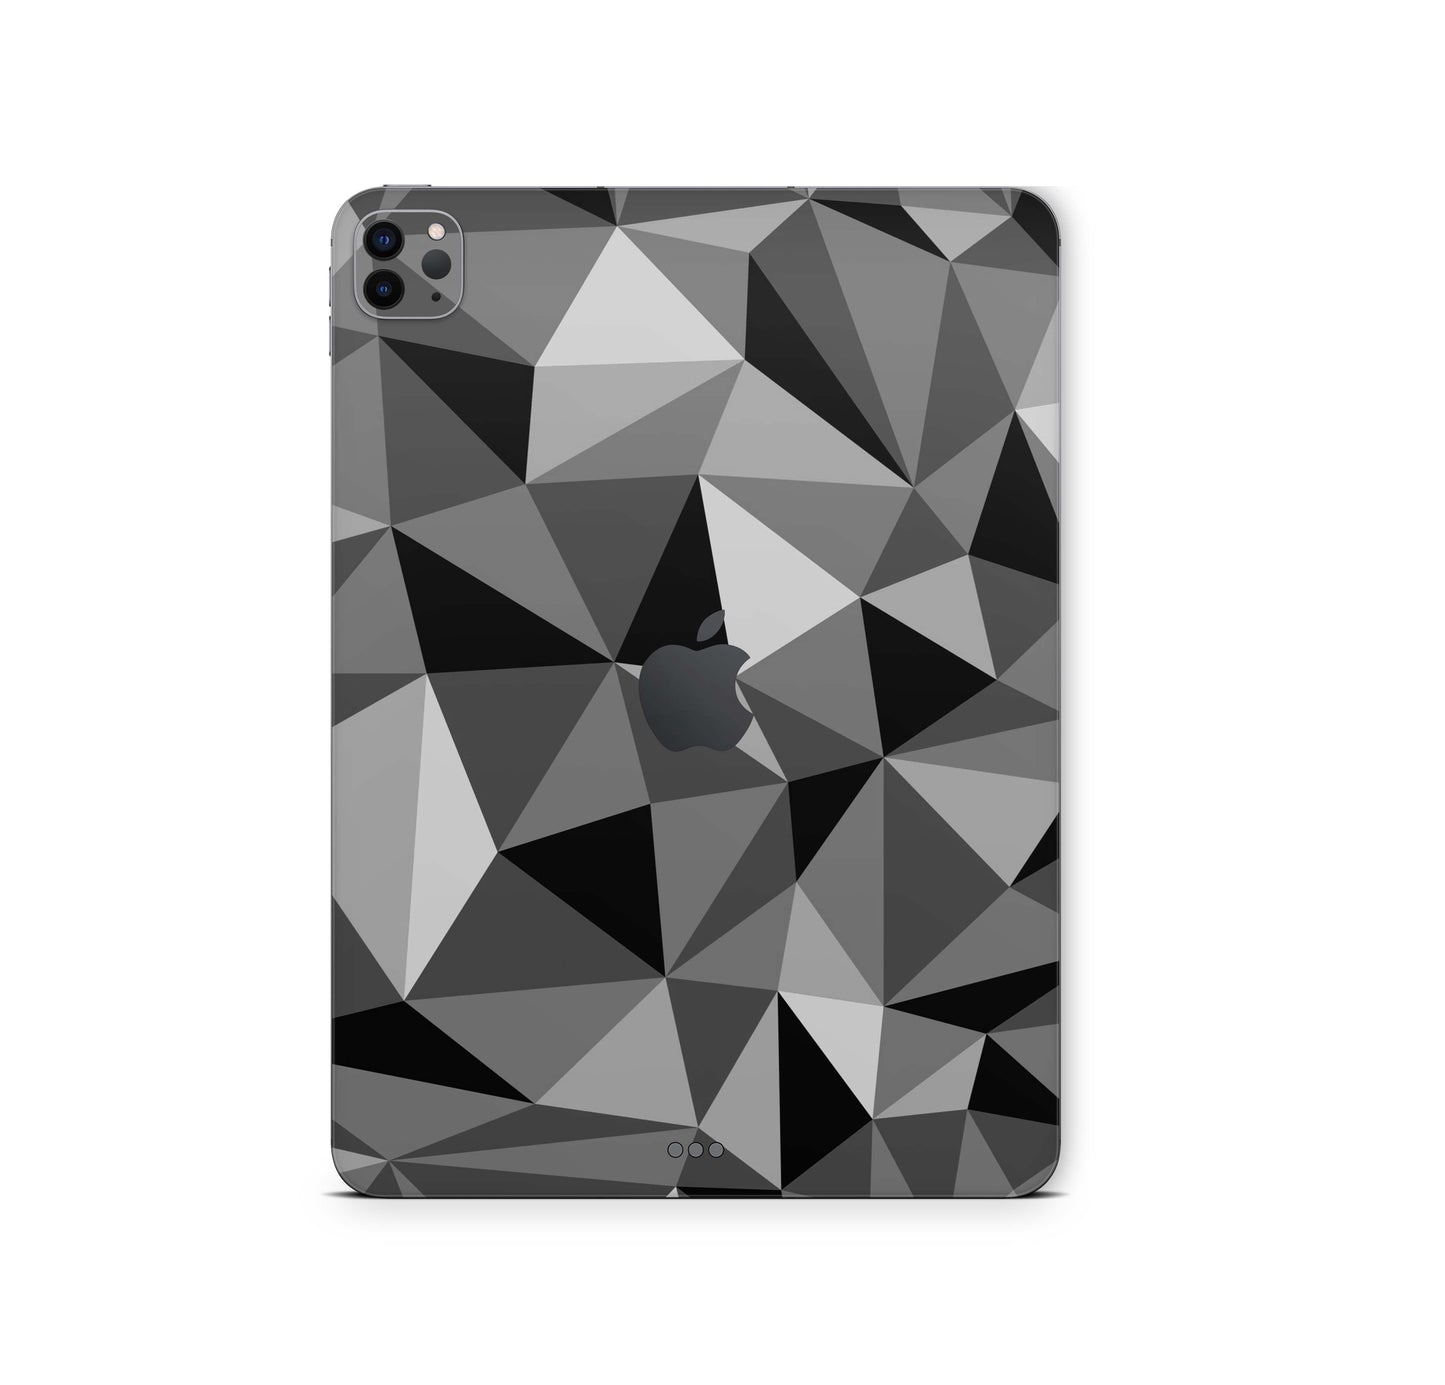 iPad Pro Skin 11" 3.Generation M1 2021 Design Cover Folie Vinyl Skins & Wraps Aufkleber Skins4u Polygrey  